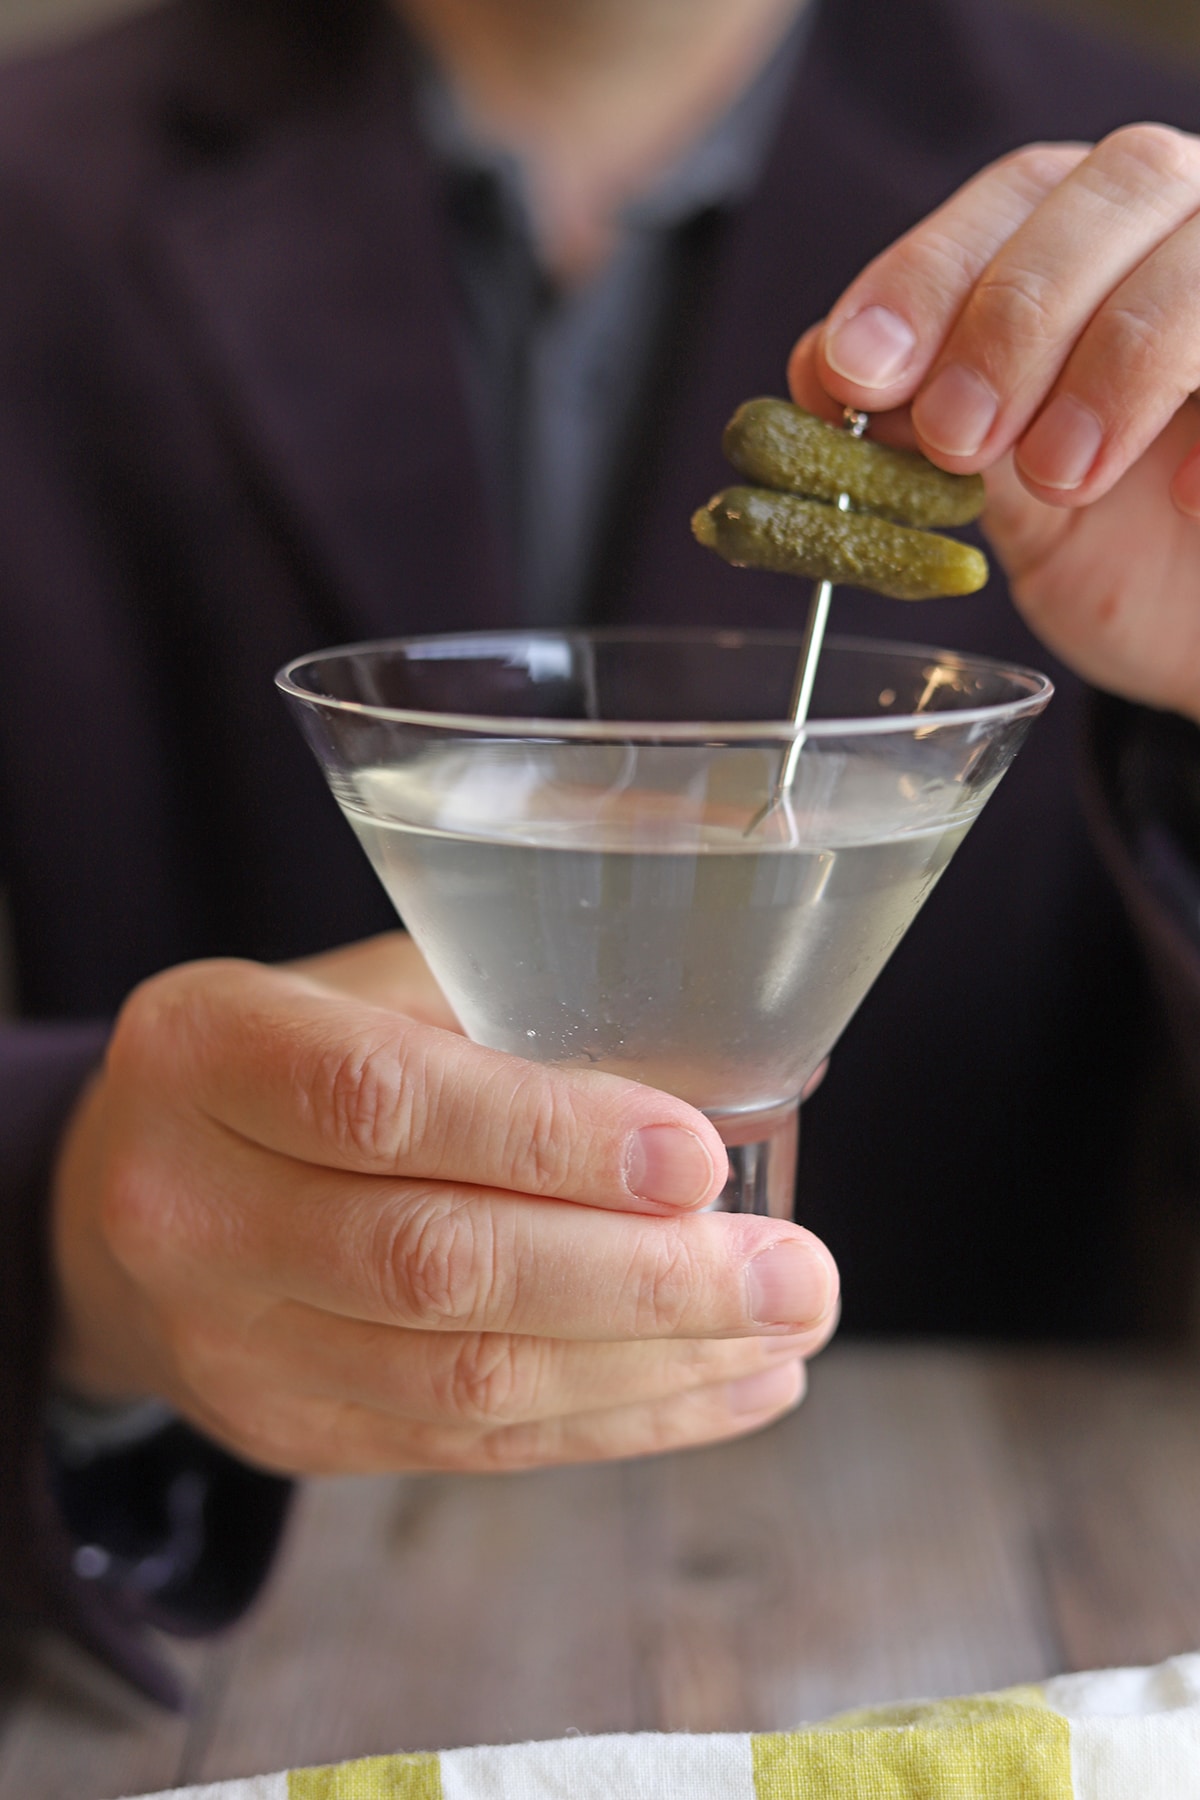 Hand lifting cornichon garnish from martini glass.